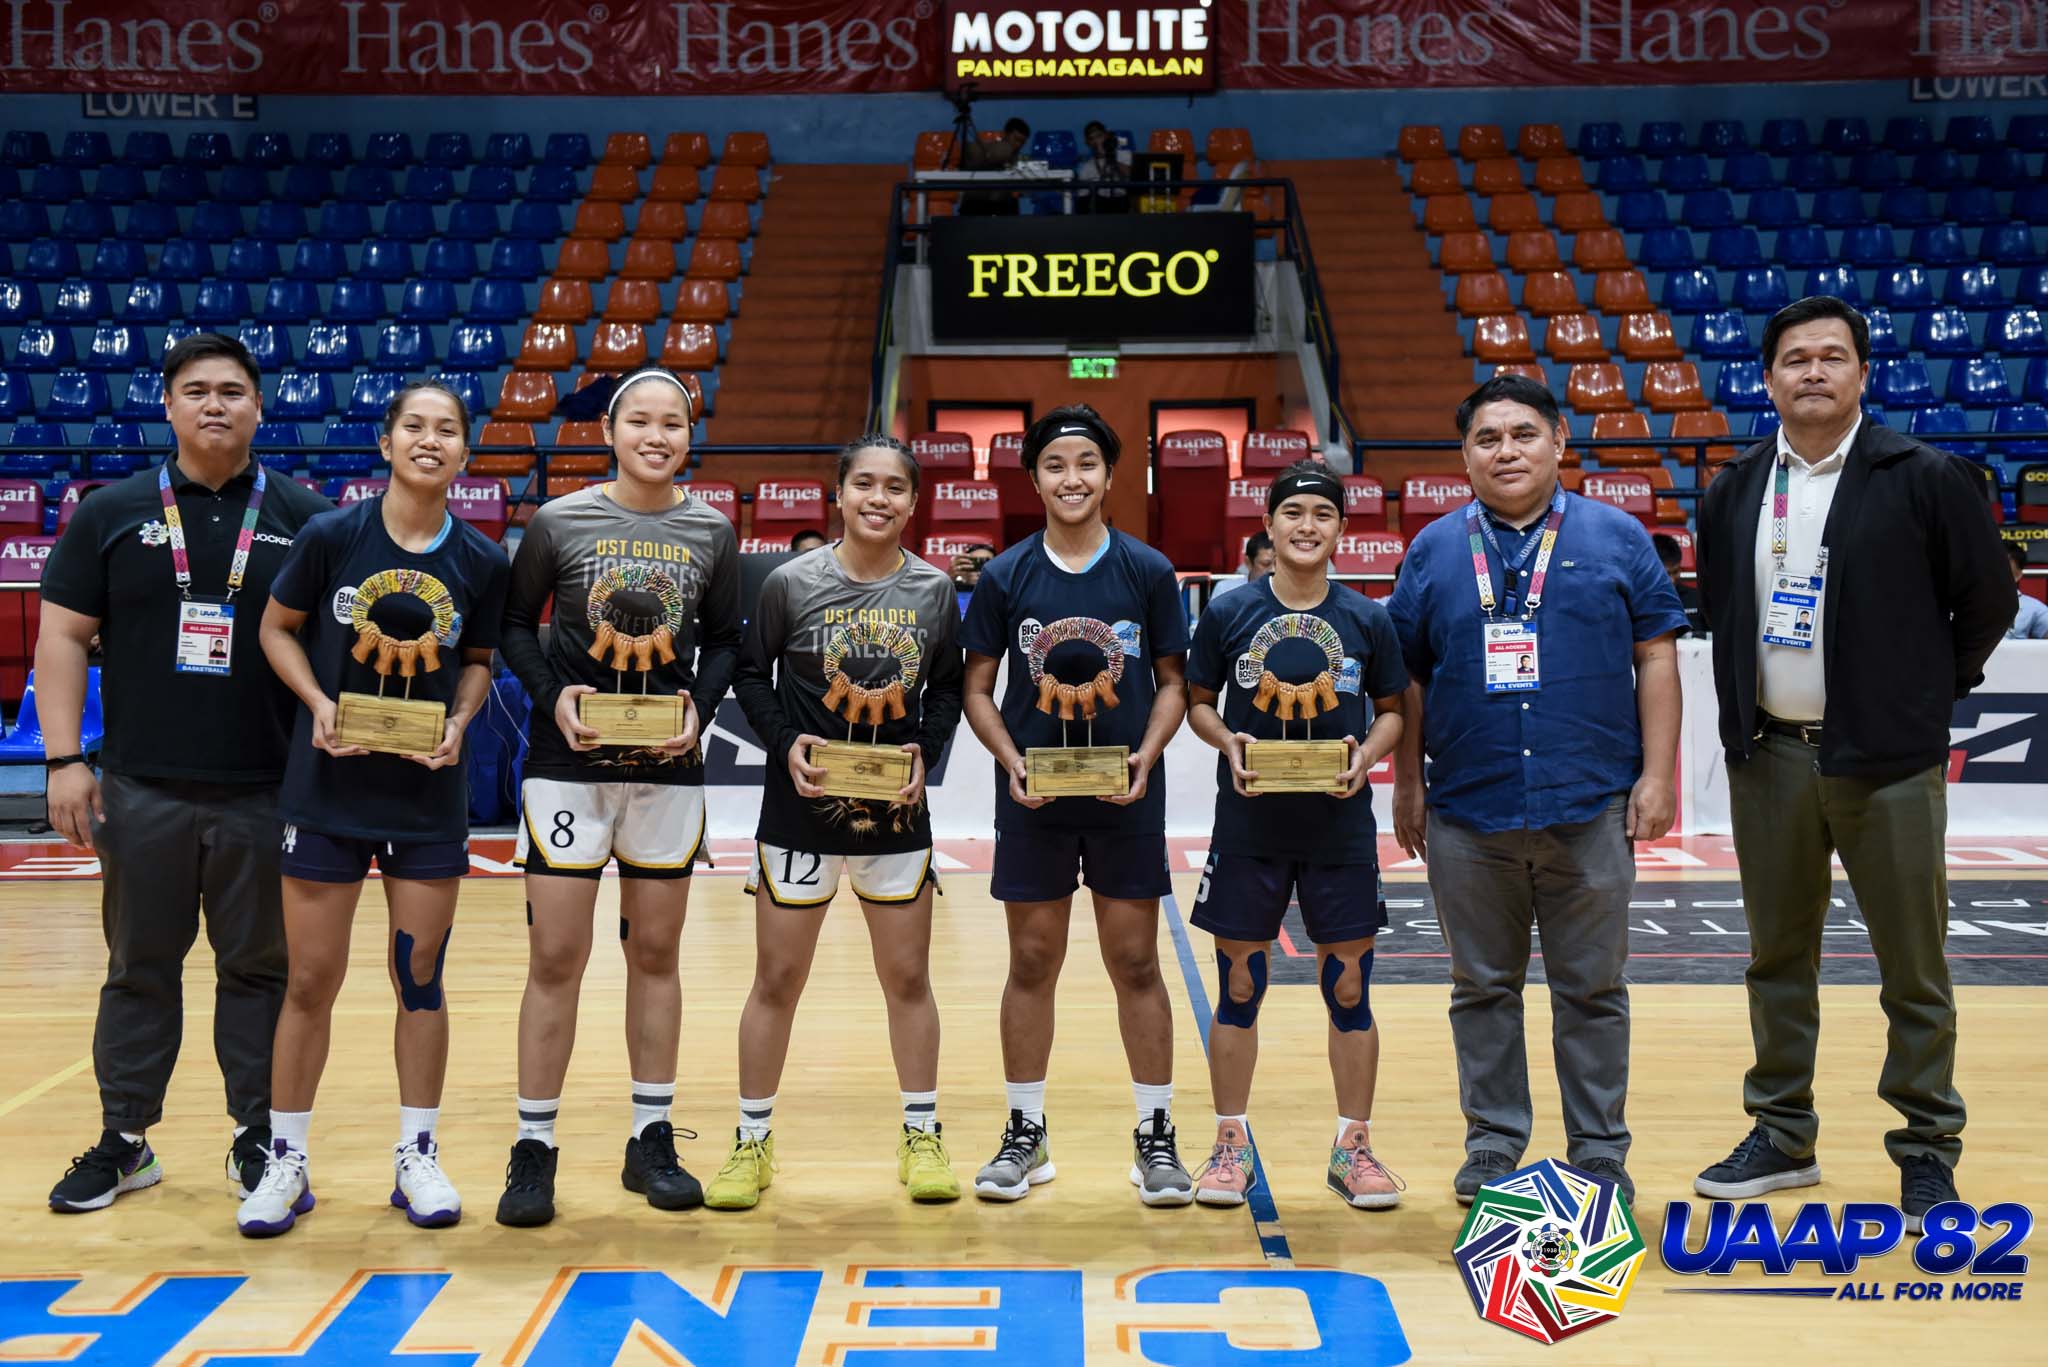 UAAP82-GIRLS-BB-M5-6TH-PHOTO-MYTHICAL-TEAM Ewon Arayi grateful to UAAP for starting Girls' Basketball tourney AdU Basketball News UAAP  - philippine sports news